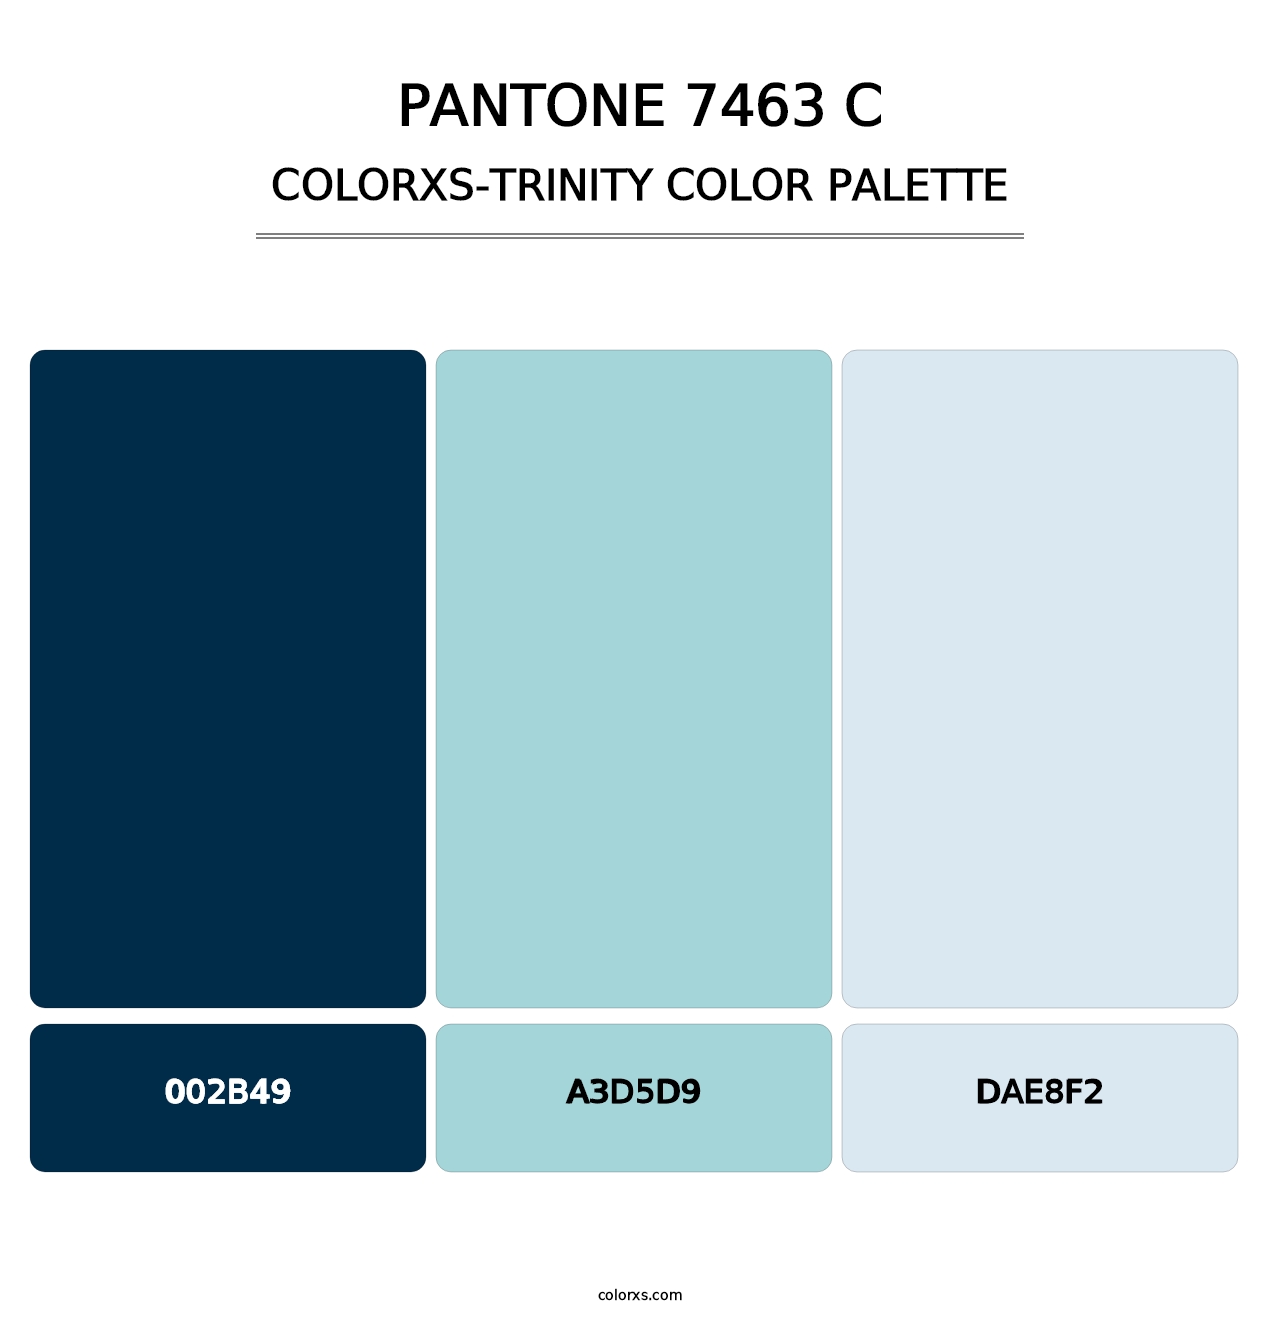 PANTONE 7463 C - Colorxs Trinity Palette